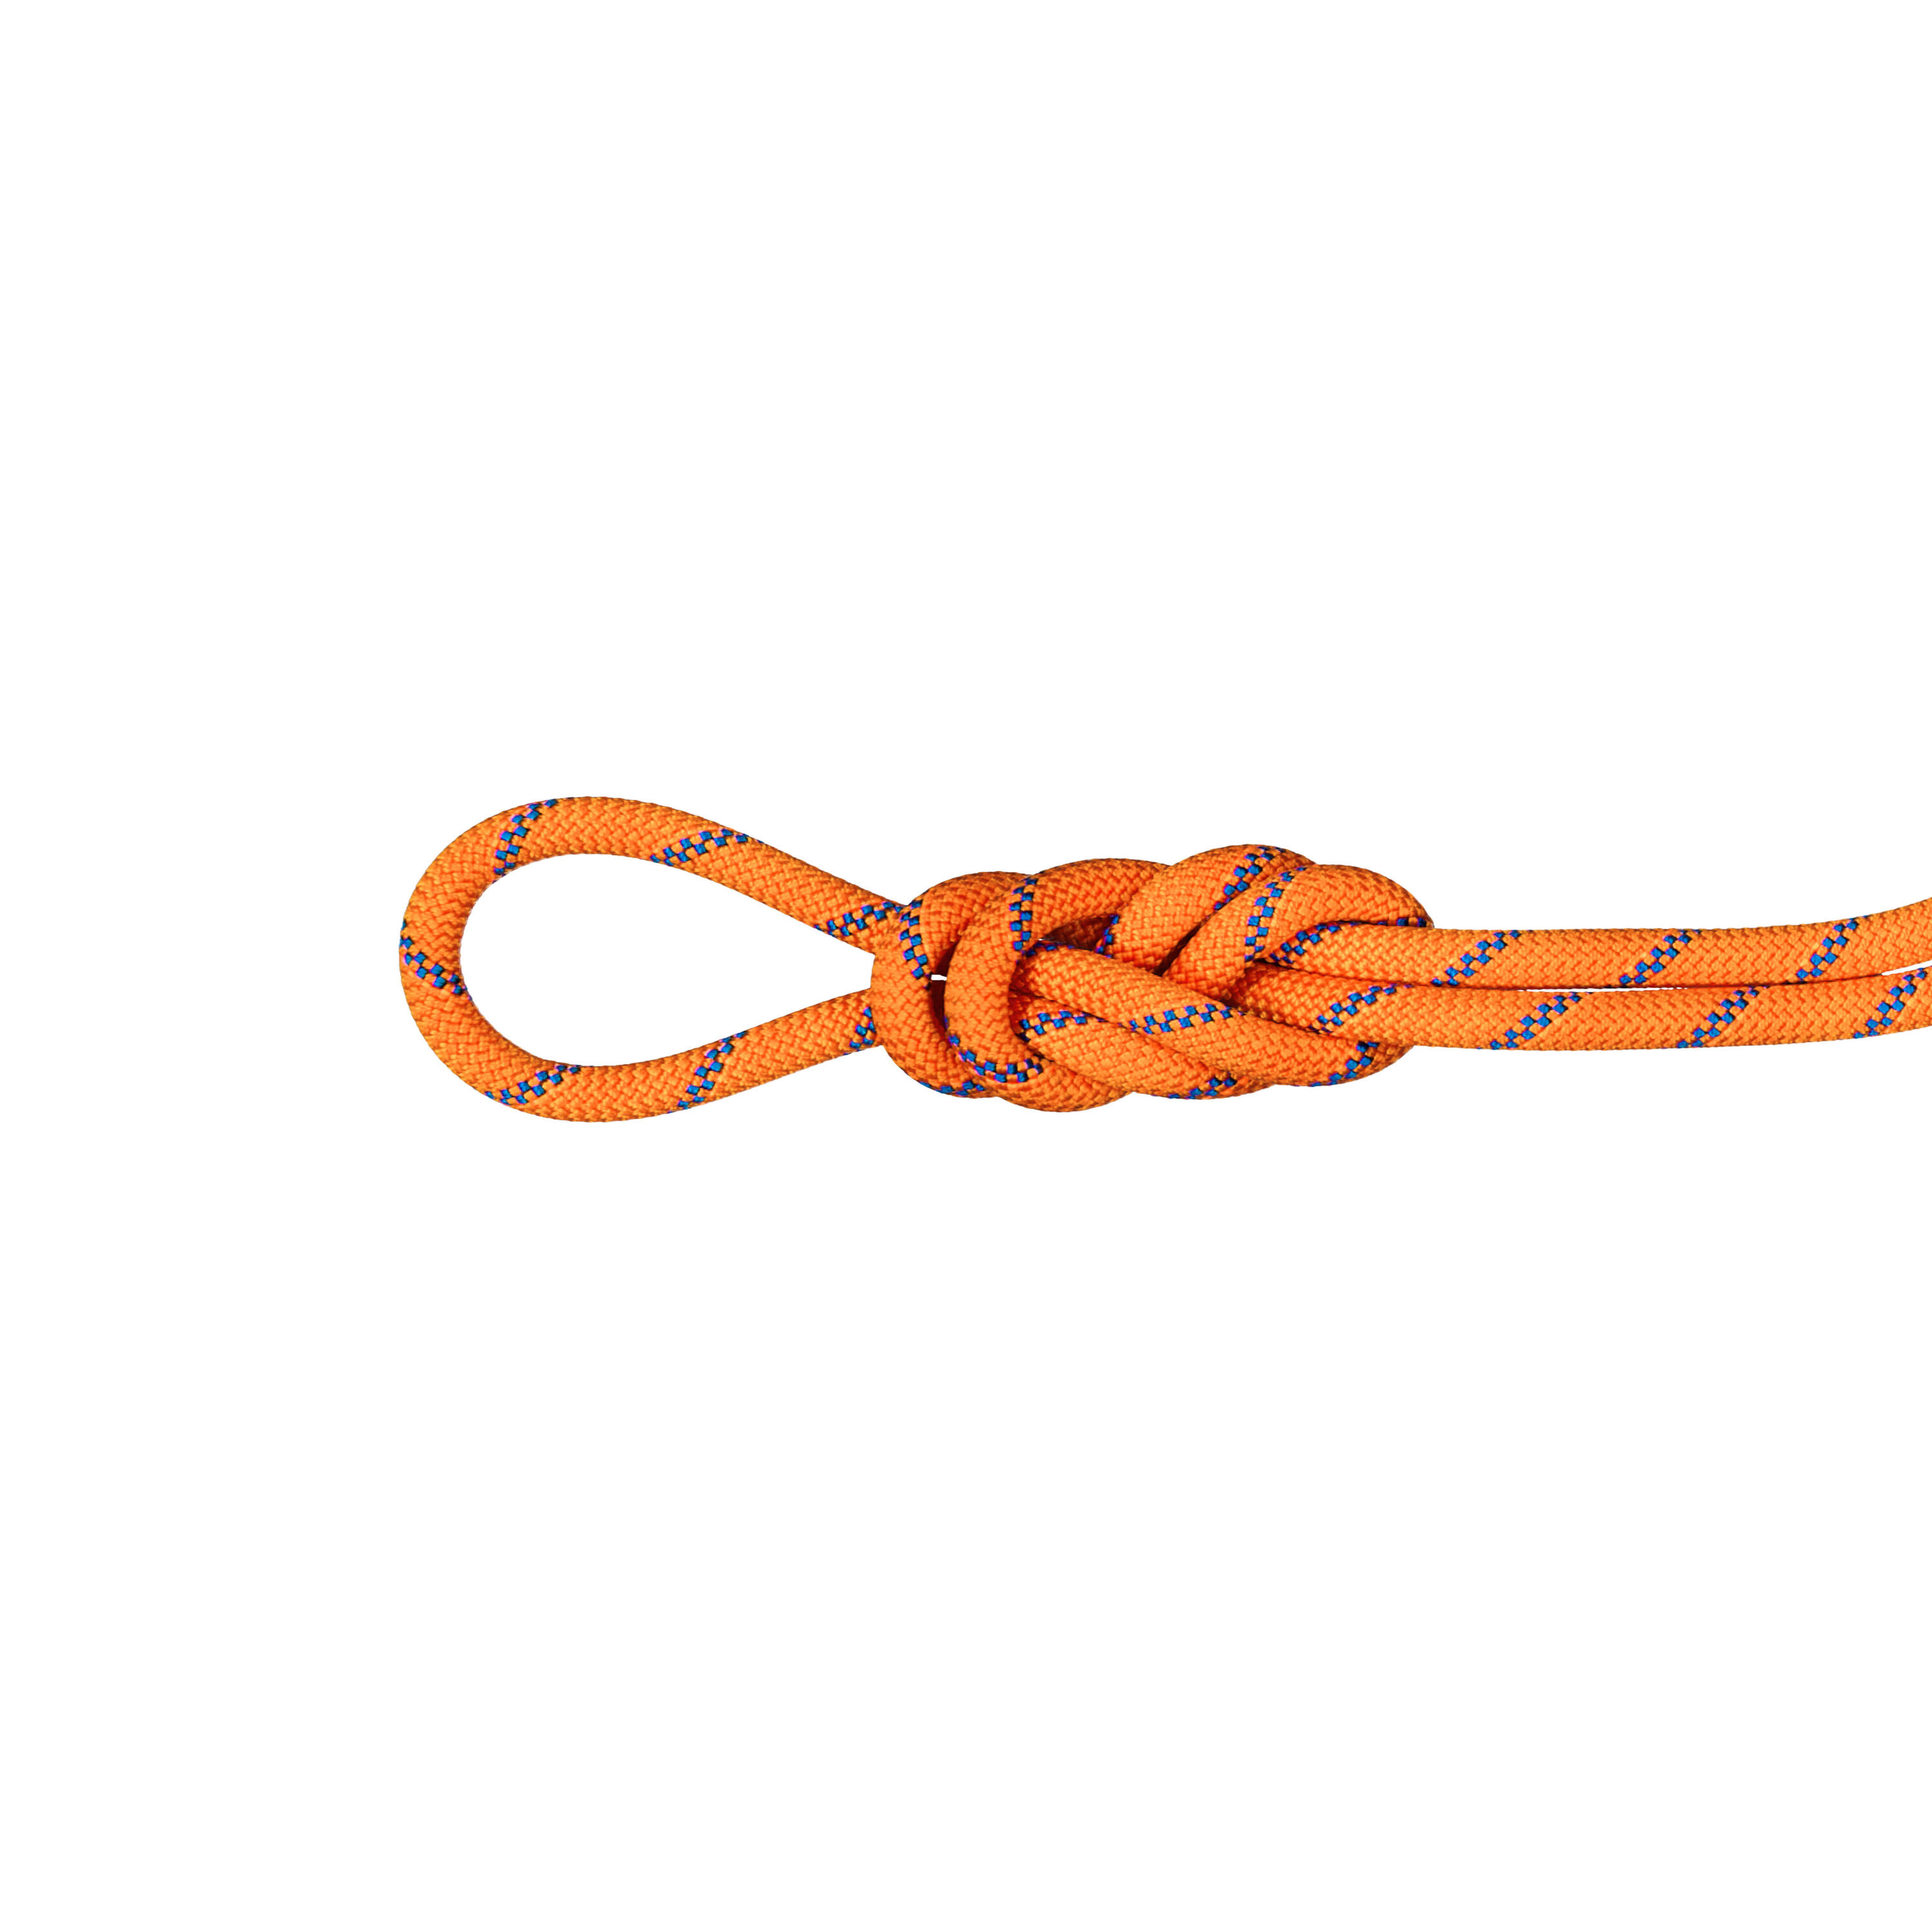 MAMMUT Alpine Sender Dry Triple-Rated Rope 9.0 mm x 60m - Orange